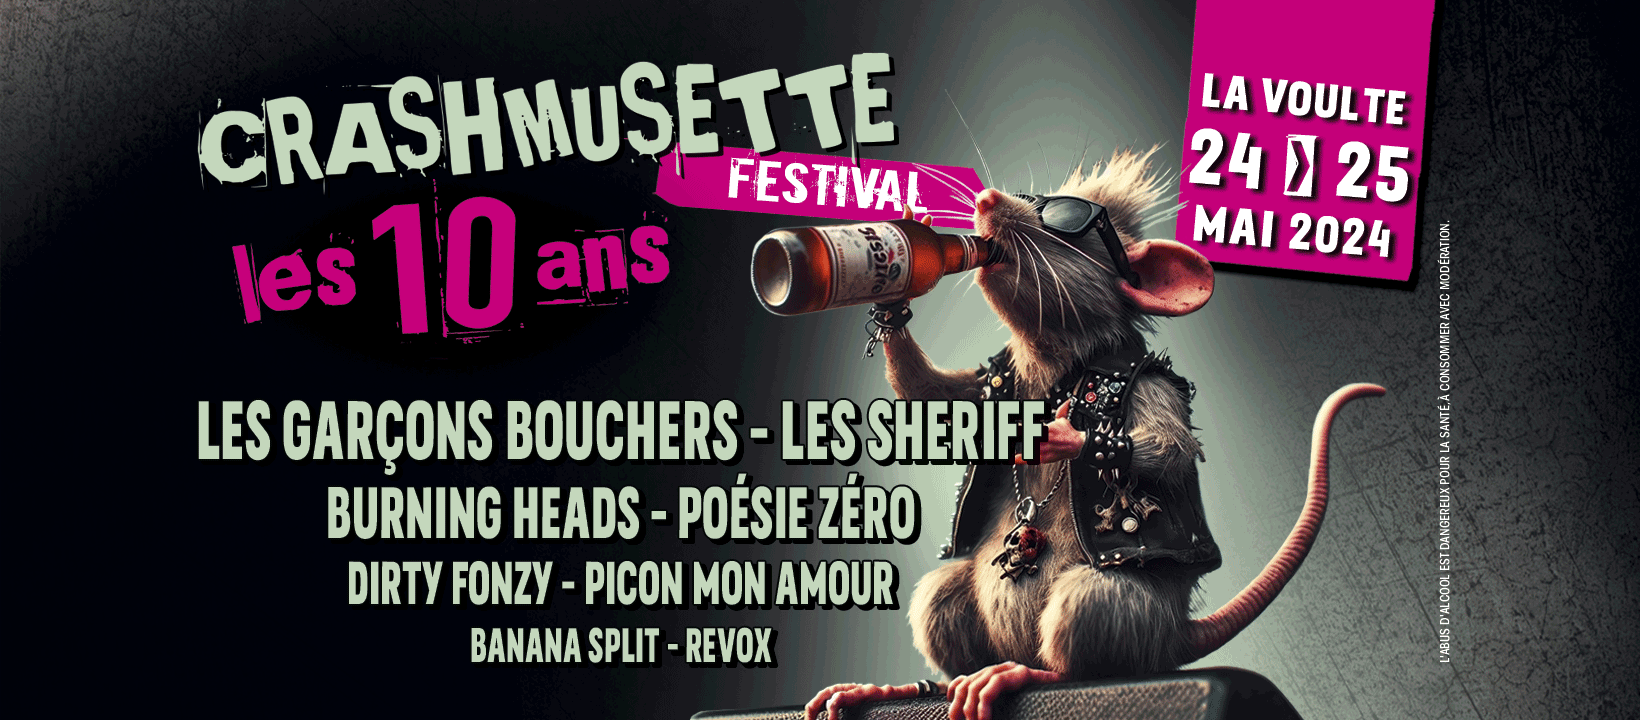 Alle leuke evenementen! : Festival de musique actuelle Crashmusette